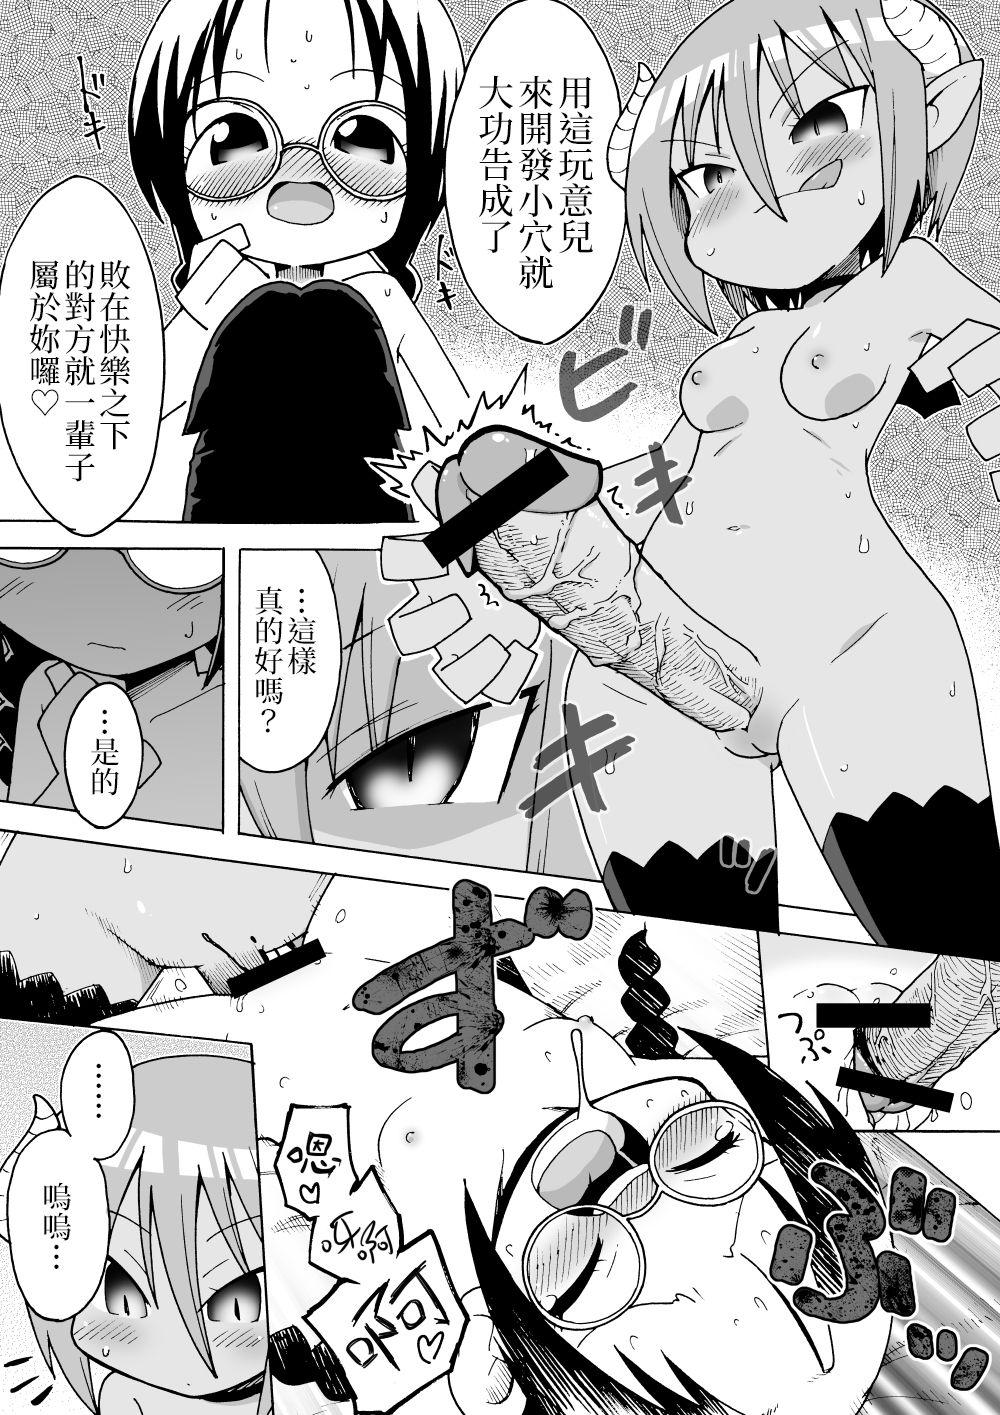 Extreme Succubus Manga | 魅魔漫畫 - Original Publico - Page 3